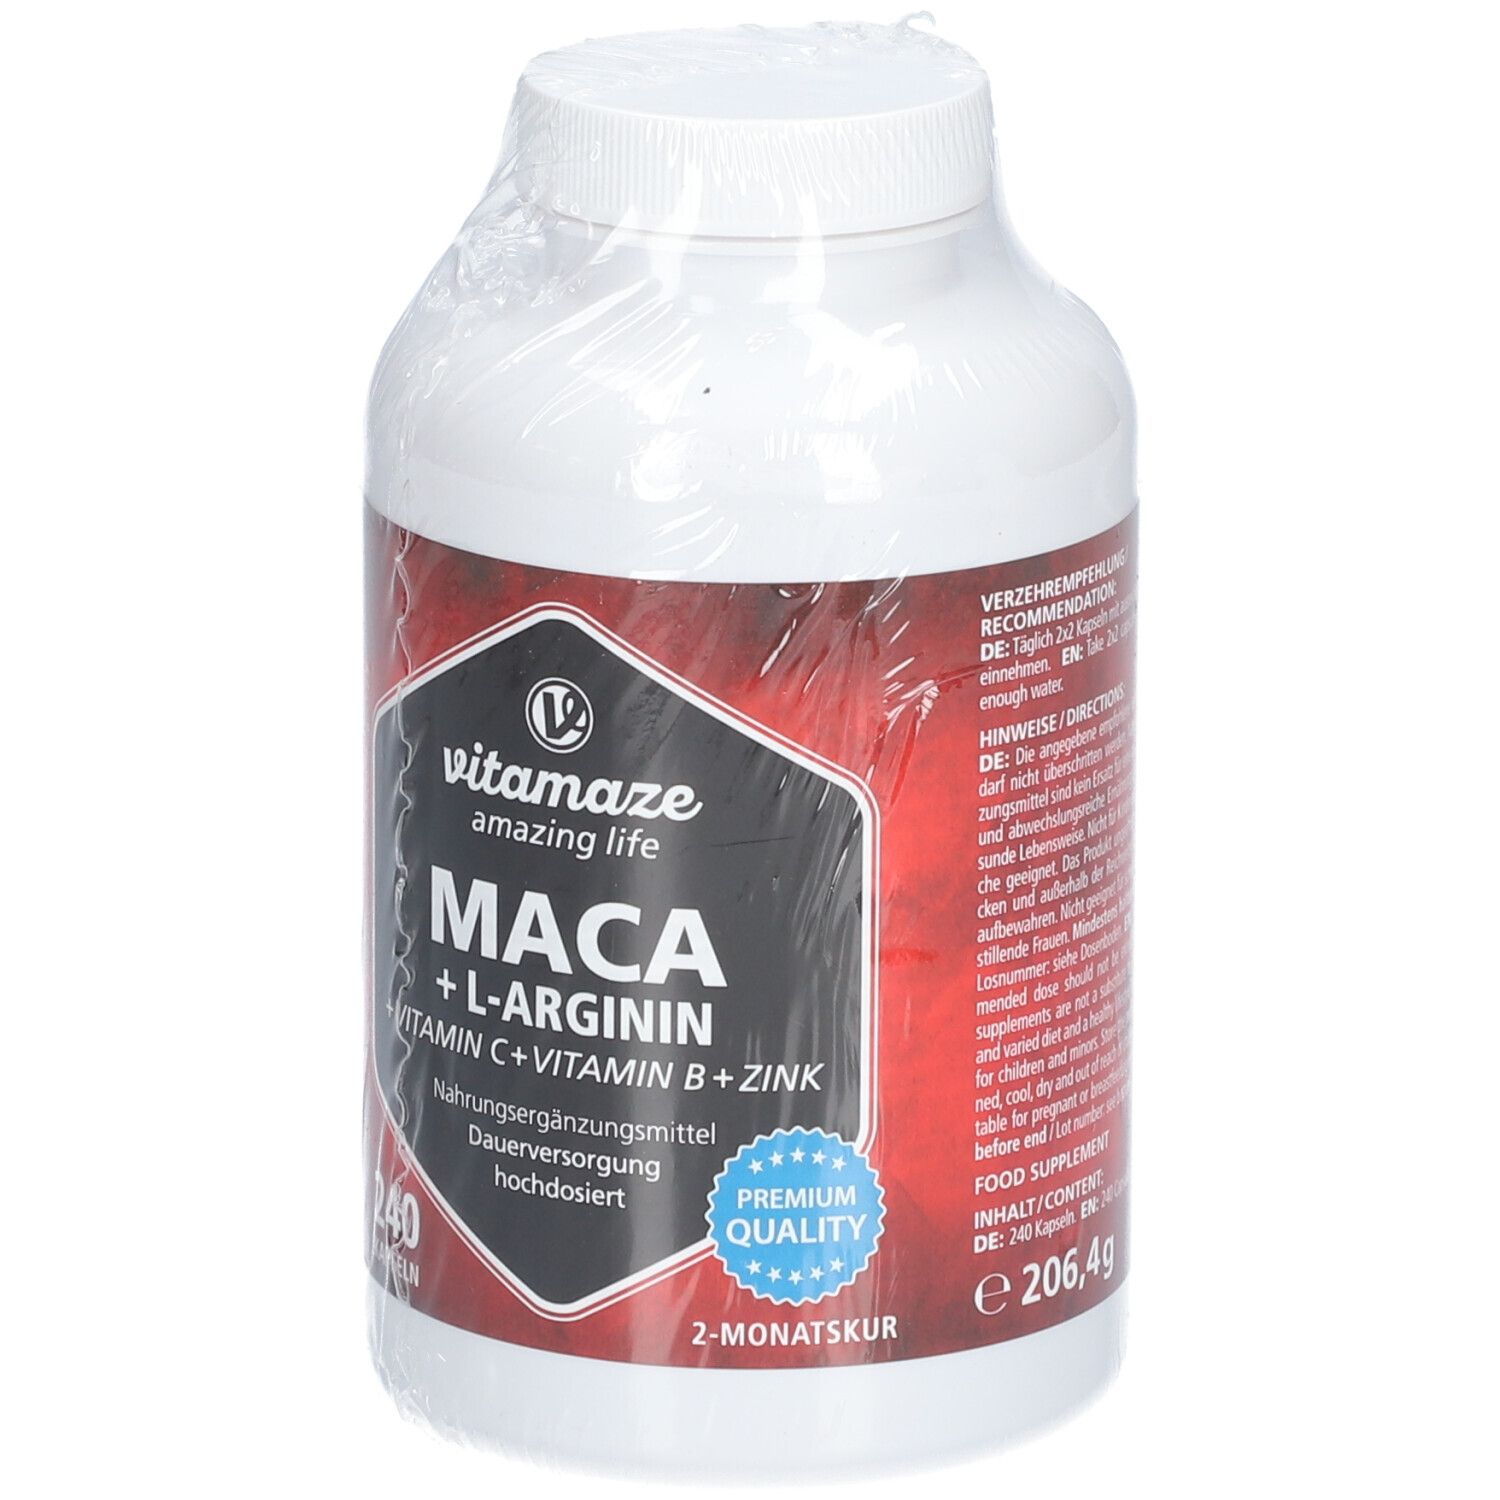 Vitamaze Maca 4000 mg + L-Arginine + Vitamines + Zinc